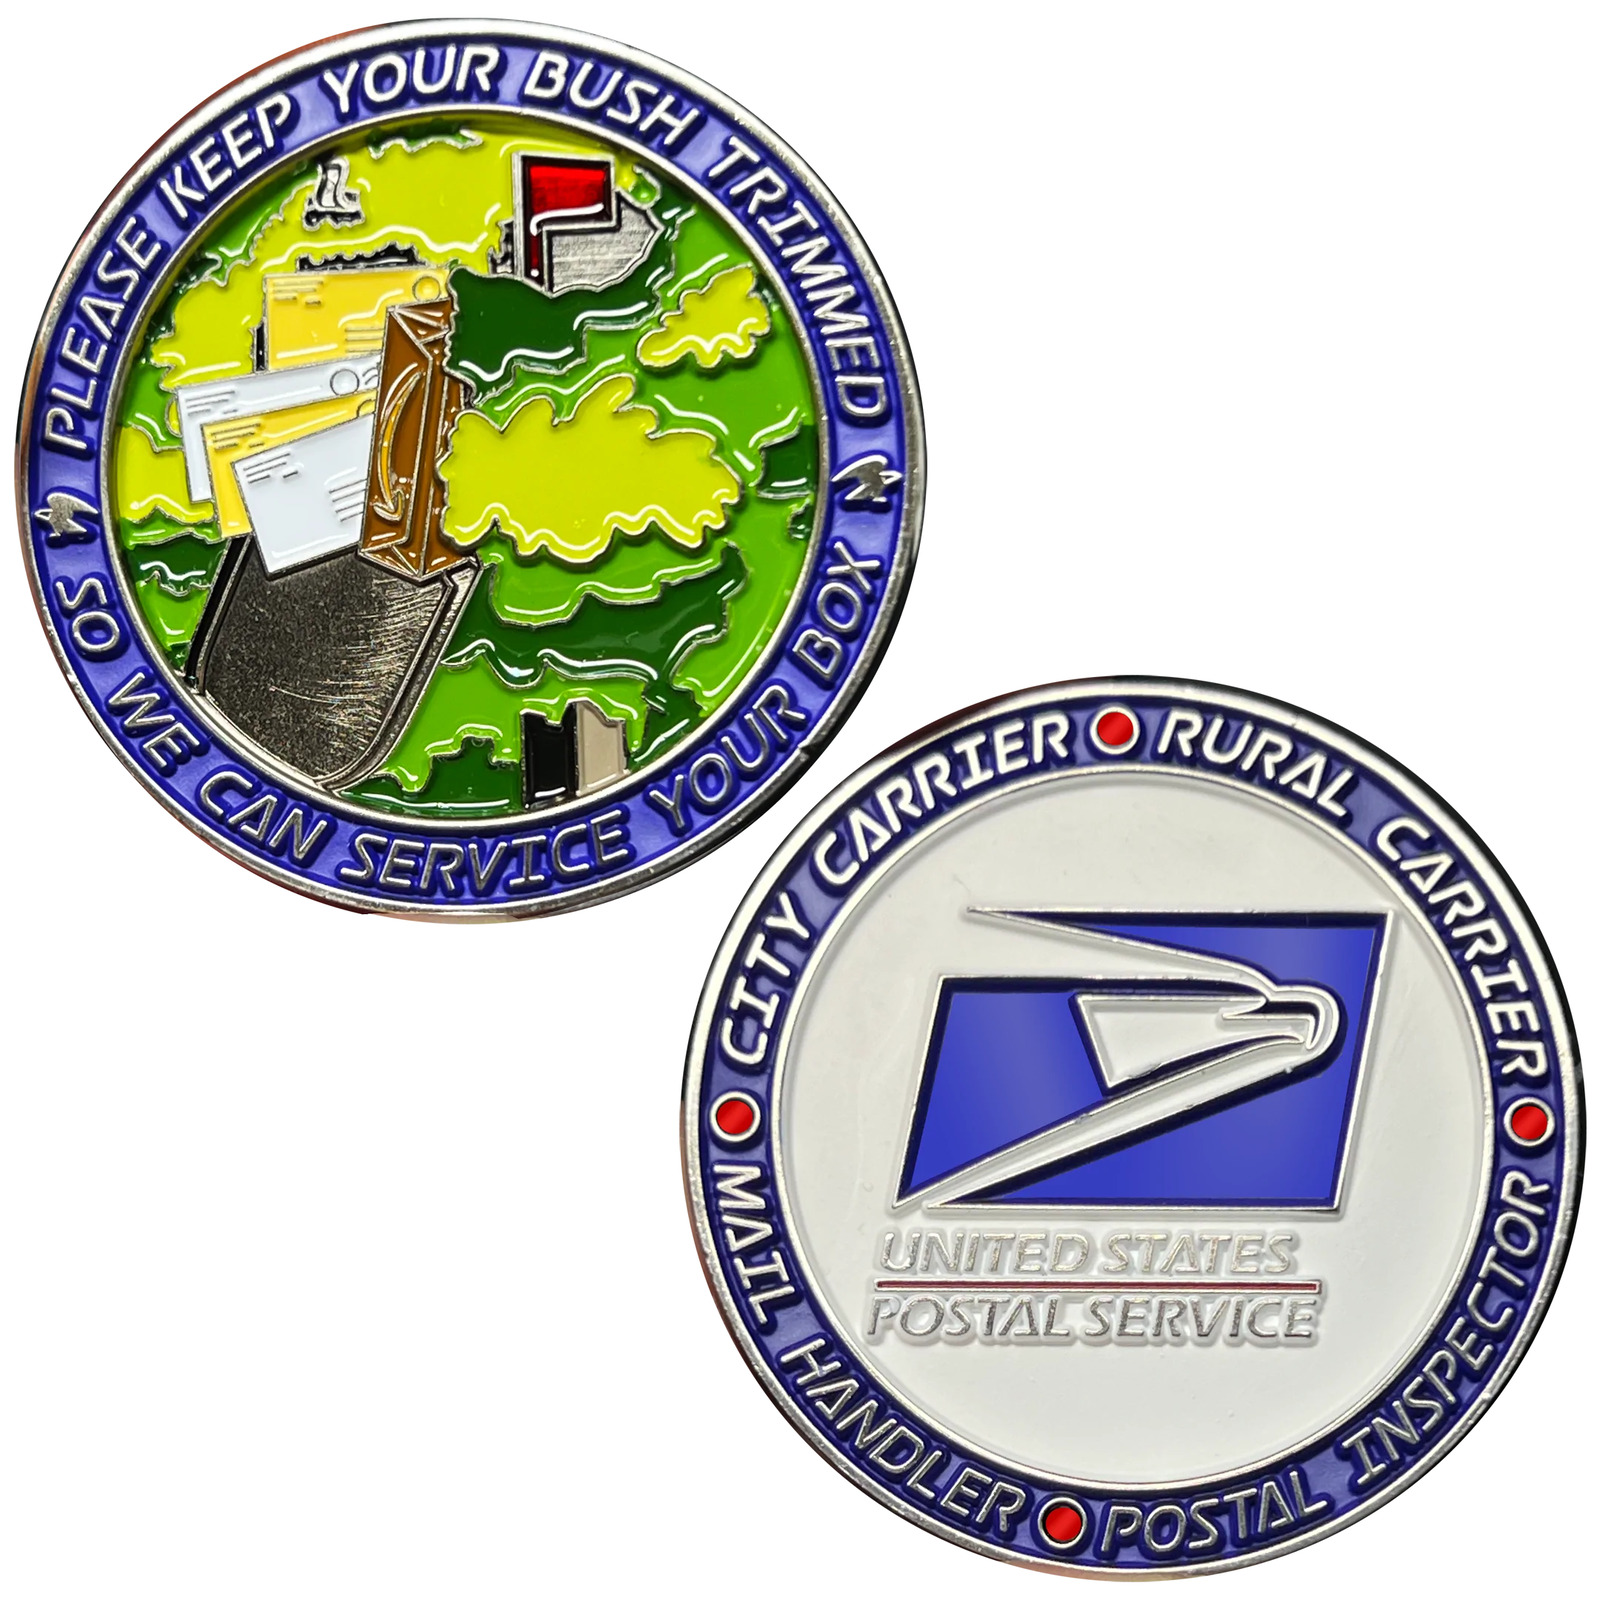 BL2-008B Trim Your Bush Challenge Coin US Postal Carrier Mail Handler Inspector